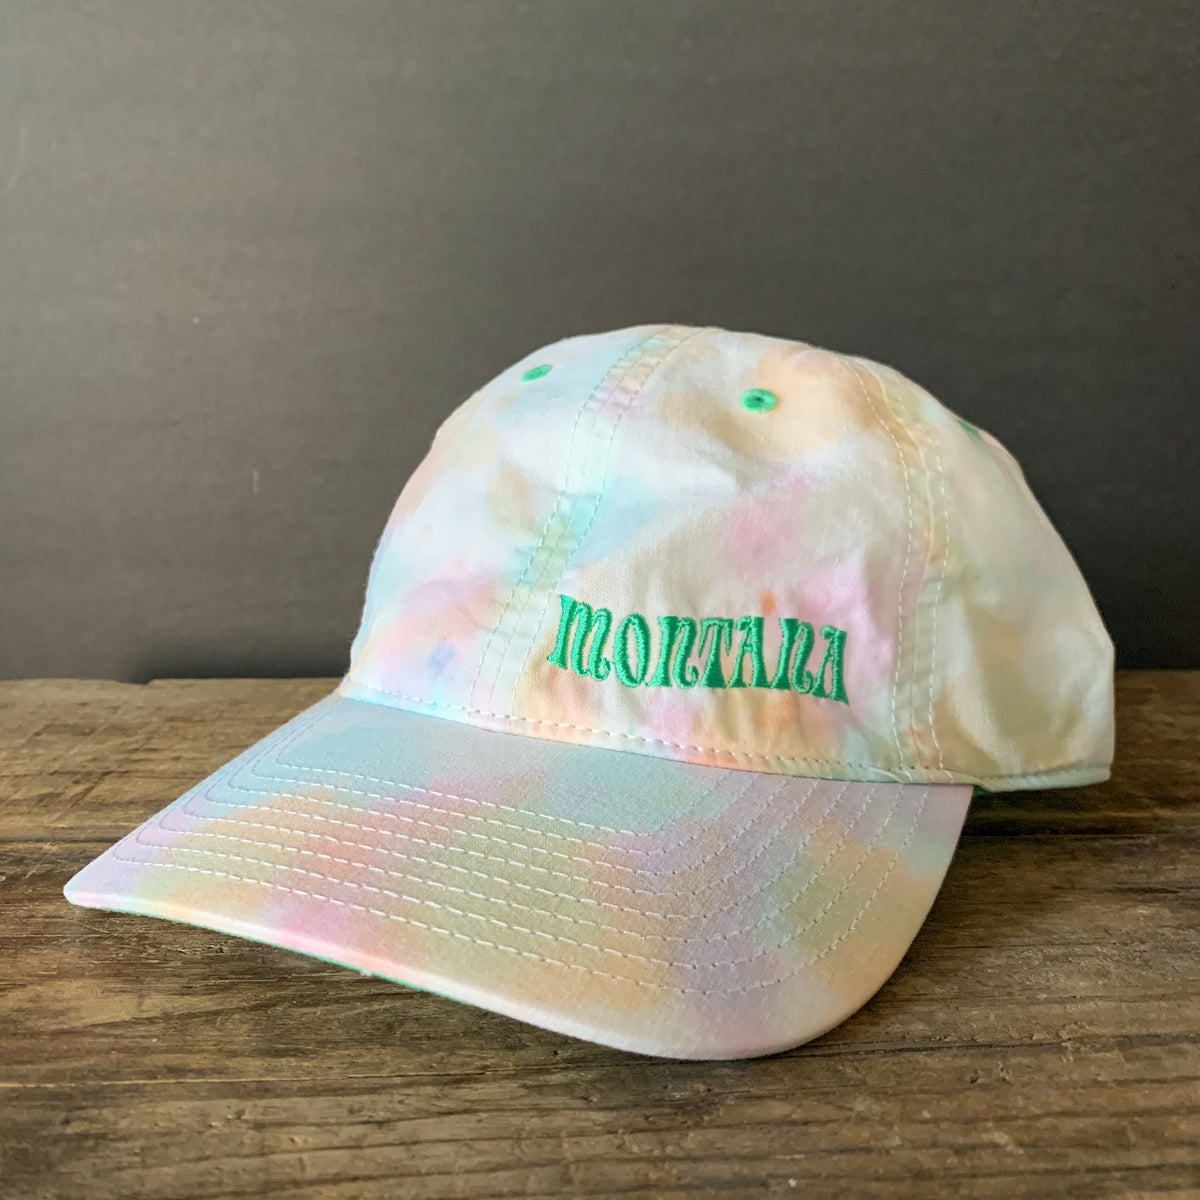 Groovy Montana Tie Dye Hat - MONTANA SHIRT CO.